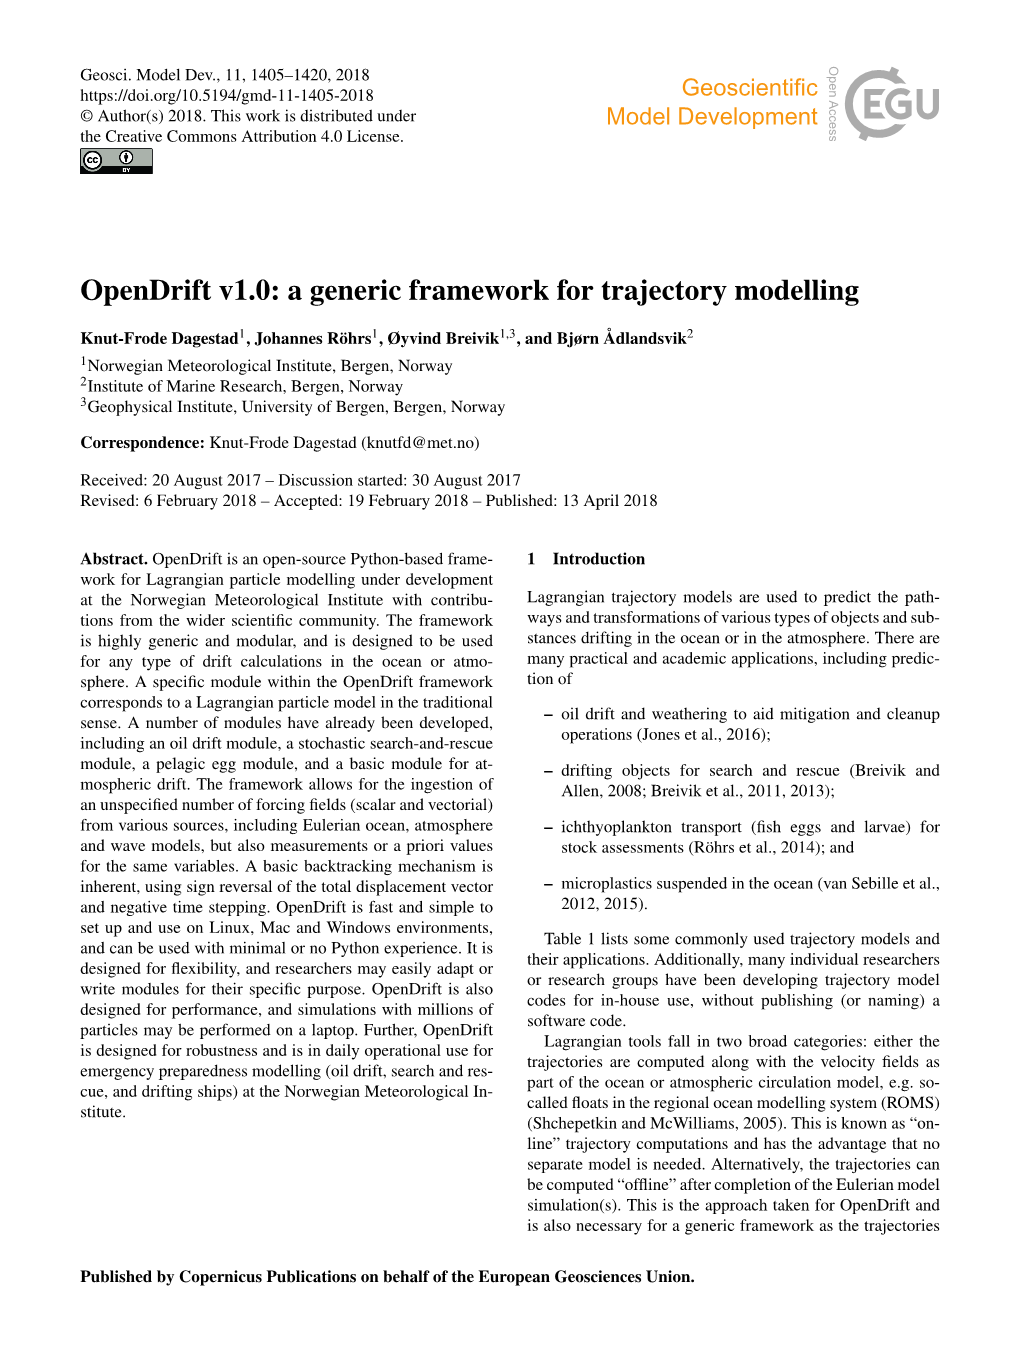 Opendrift V1.0: a Generic Framework for Trajectory Modelling